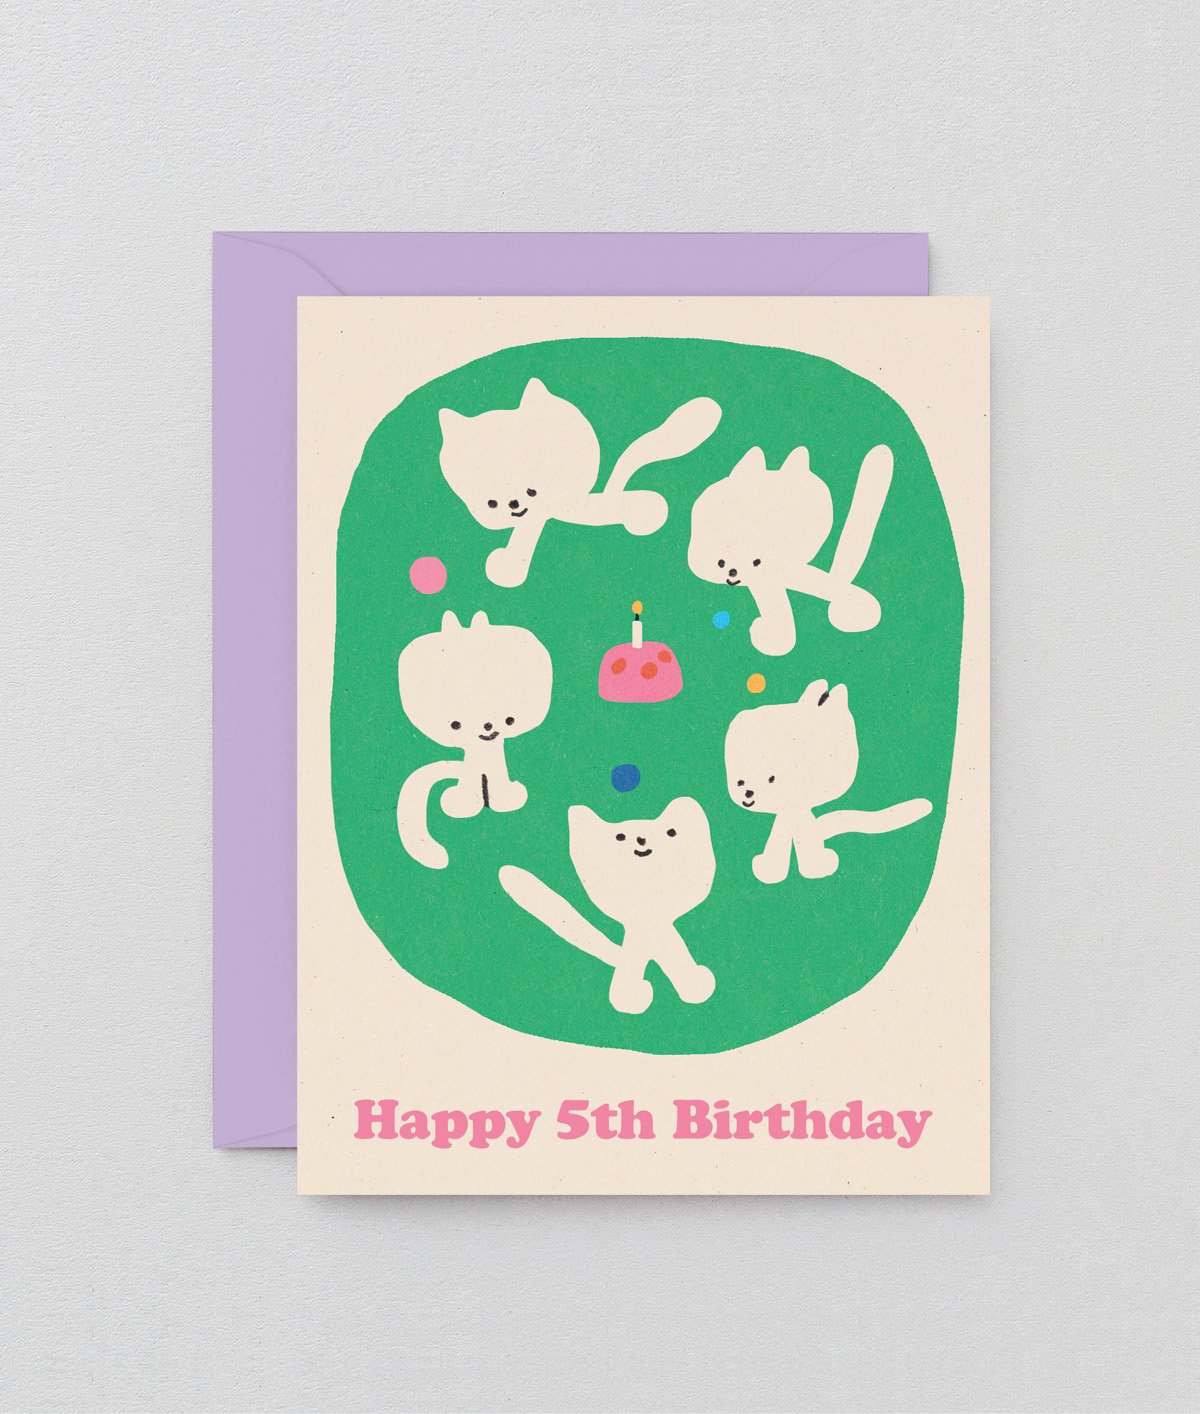 Happy 5th Birthday Kids Greetings Card